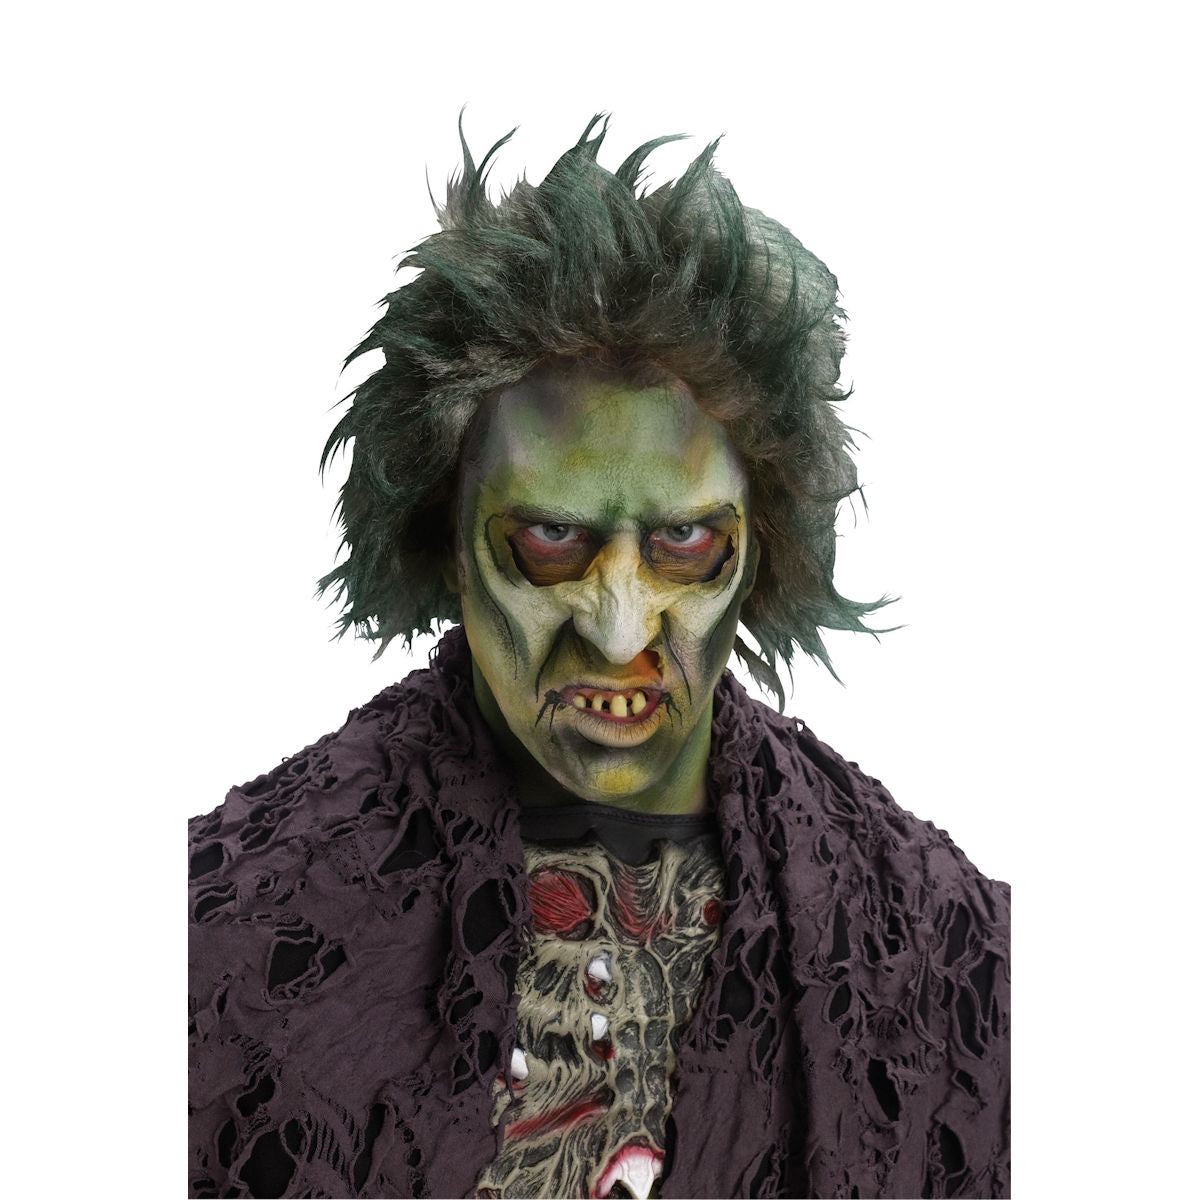 Bio Zombie Monster WIG Men's Fancy Dress Halloween Costume Accessory